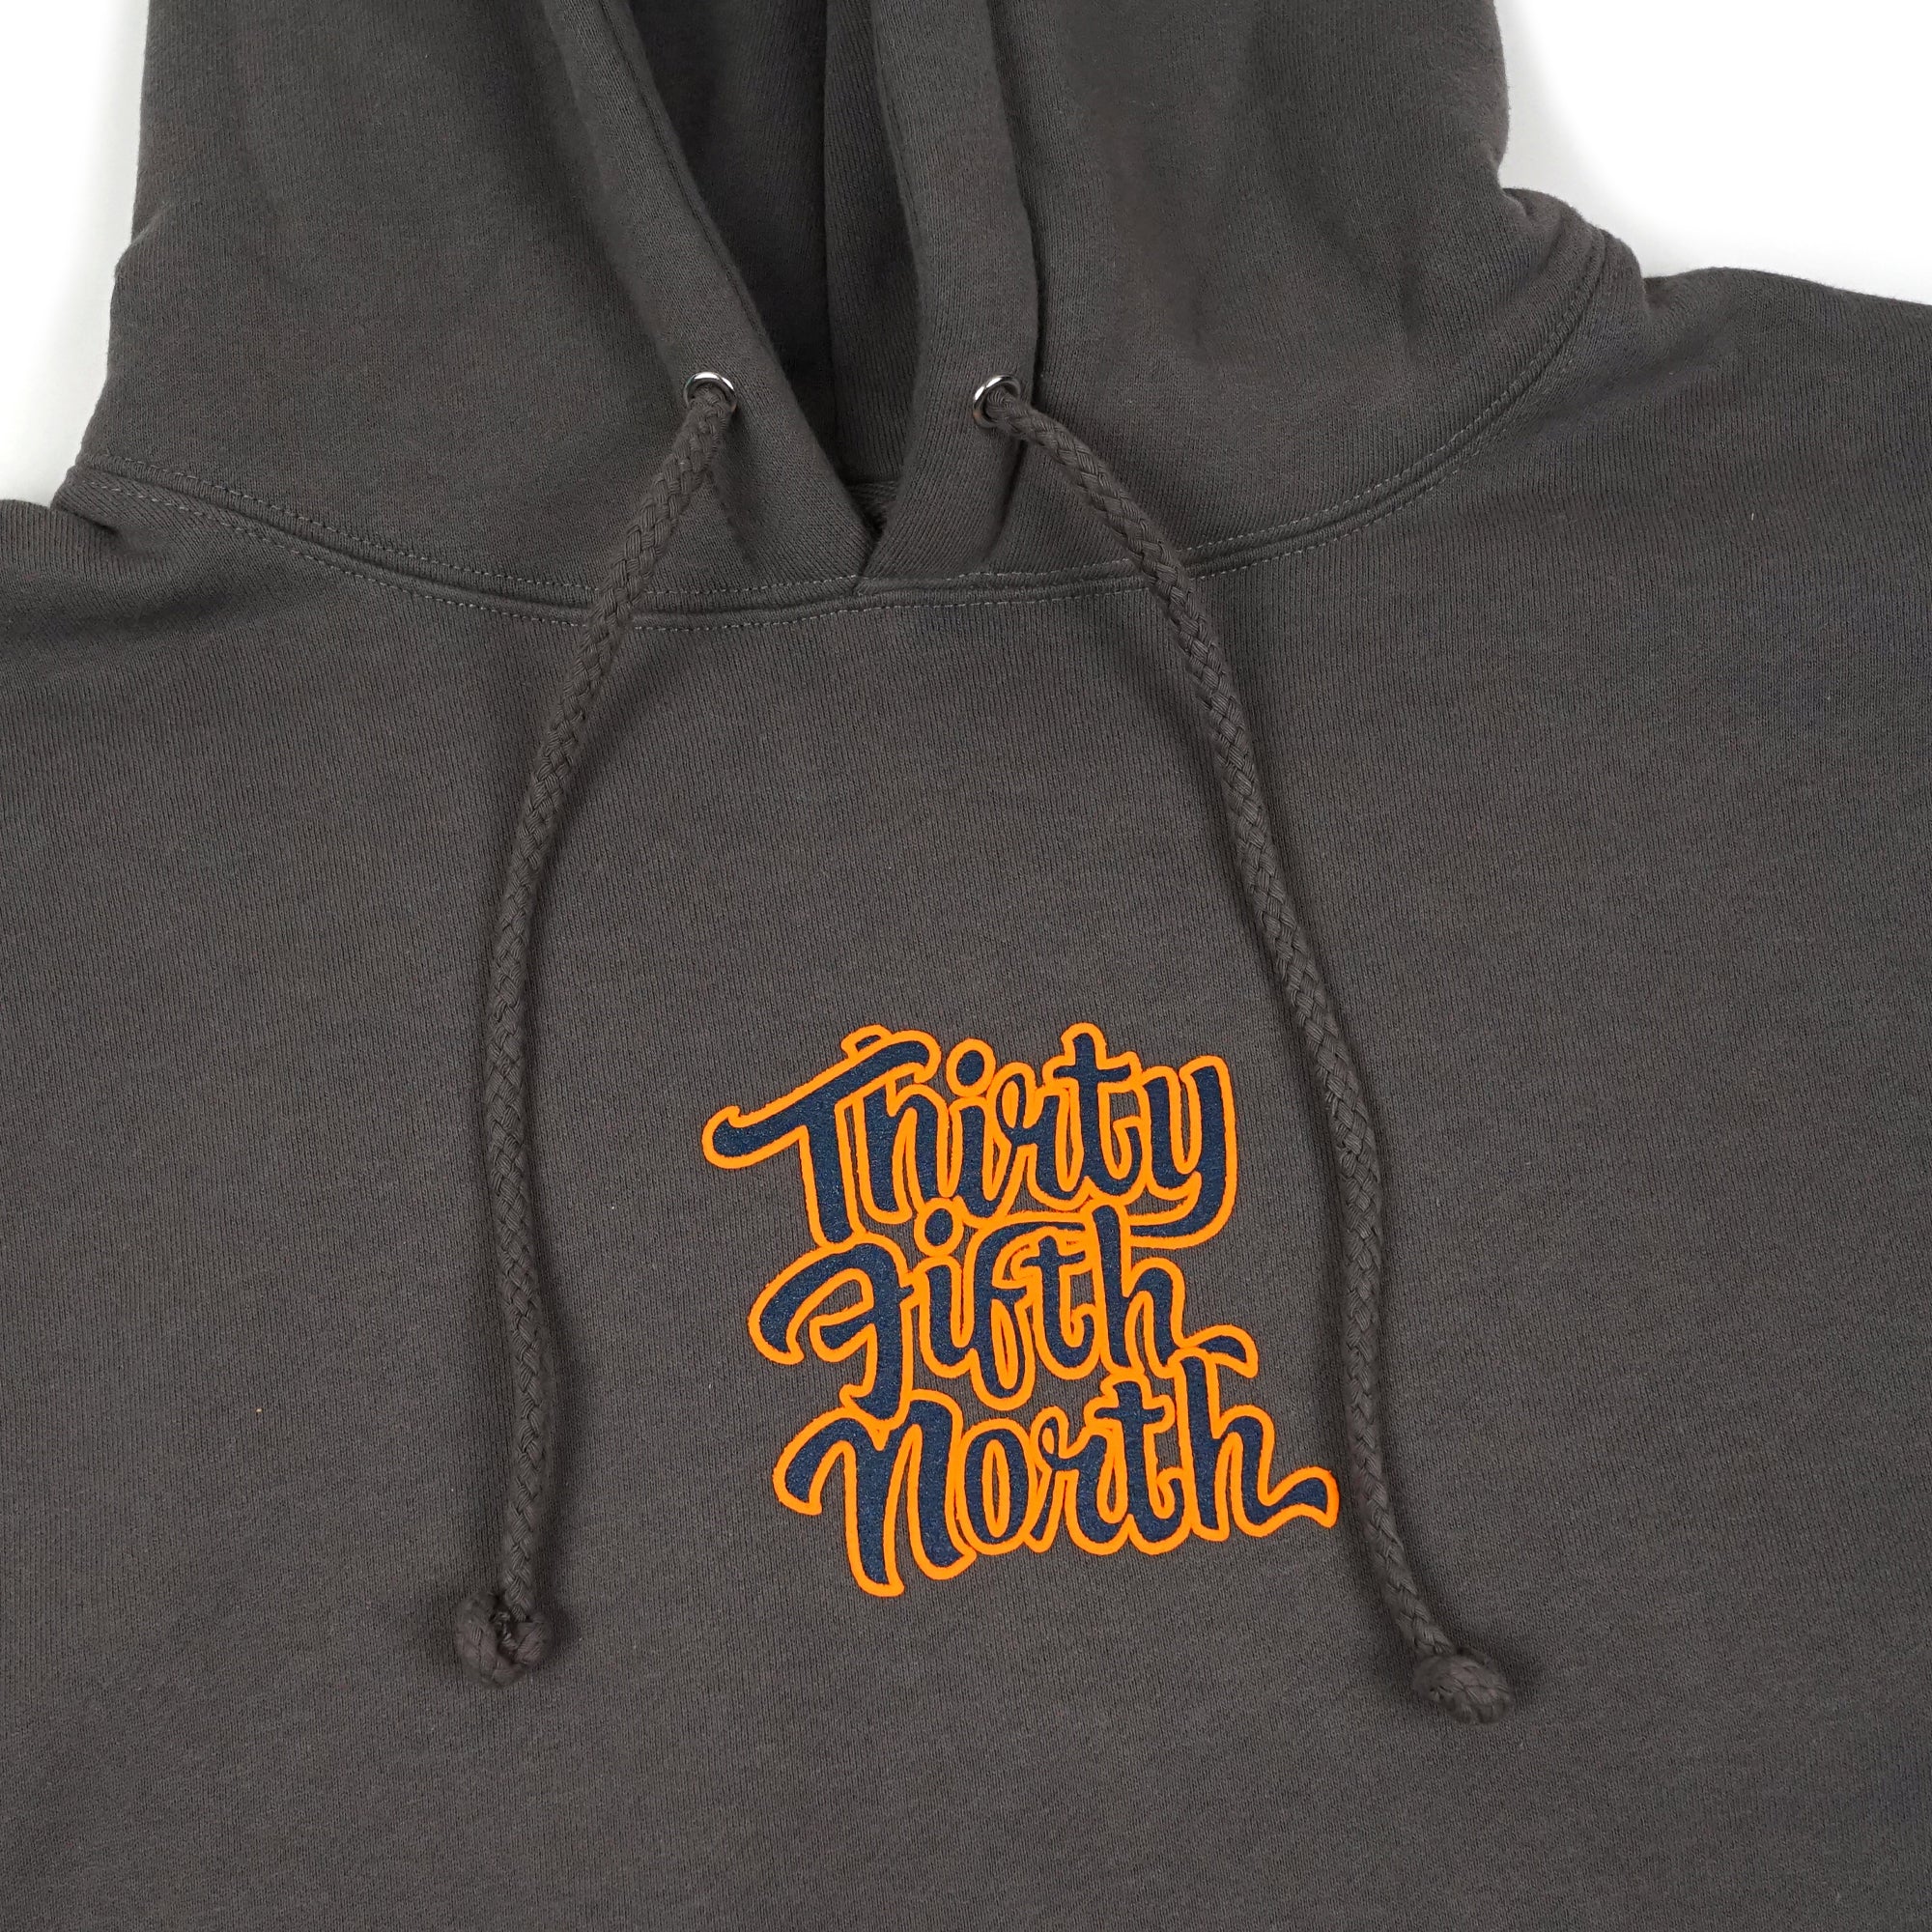 35th North Script Hooded Sweatshirt - Charcoal